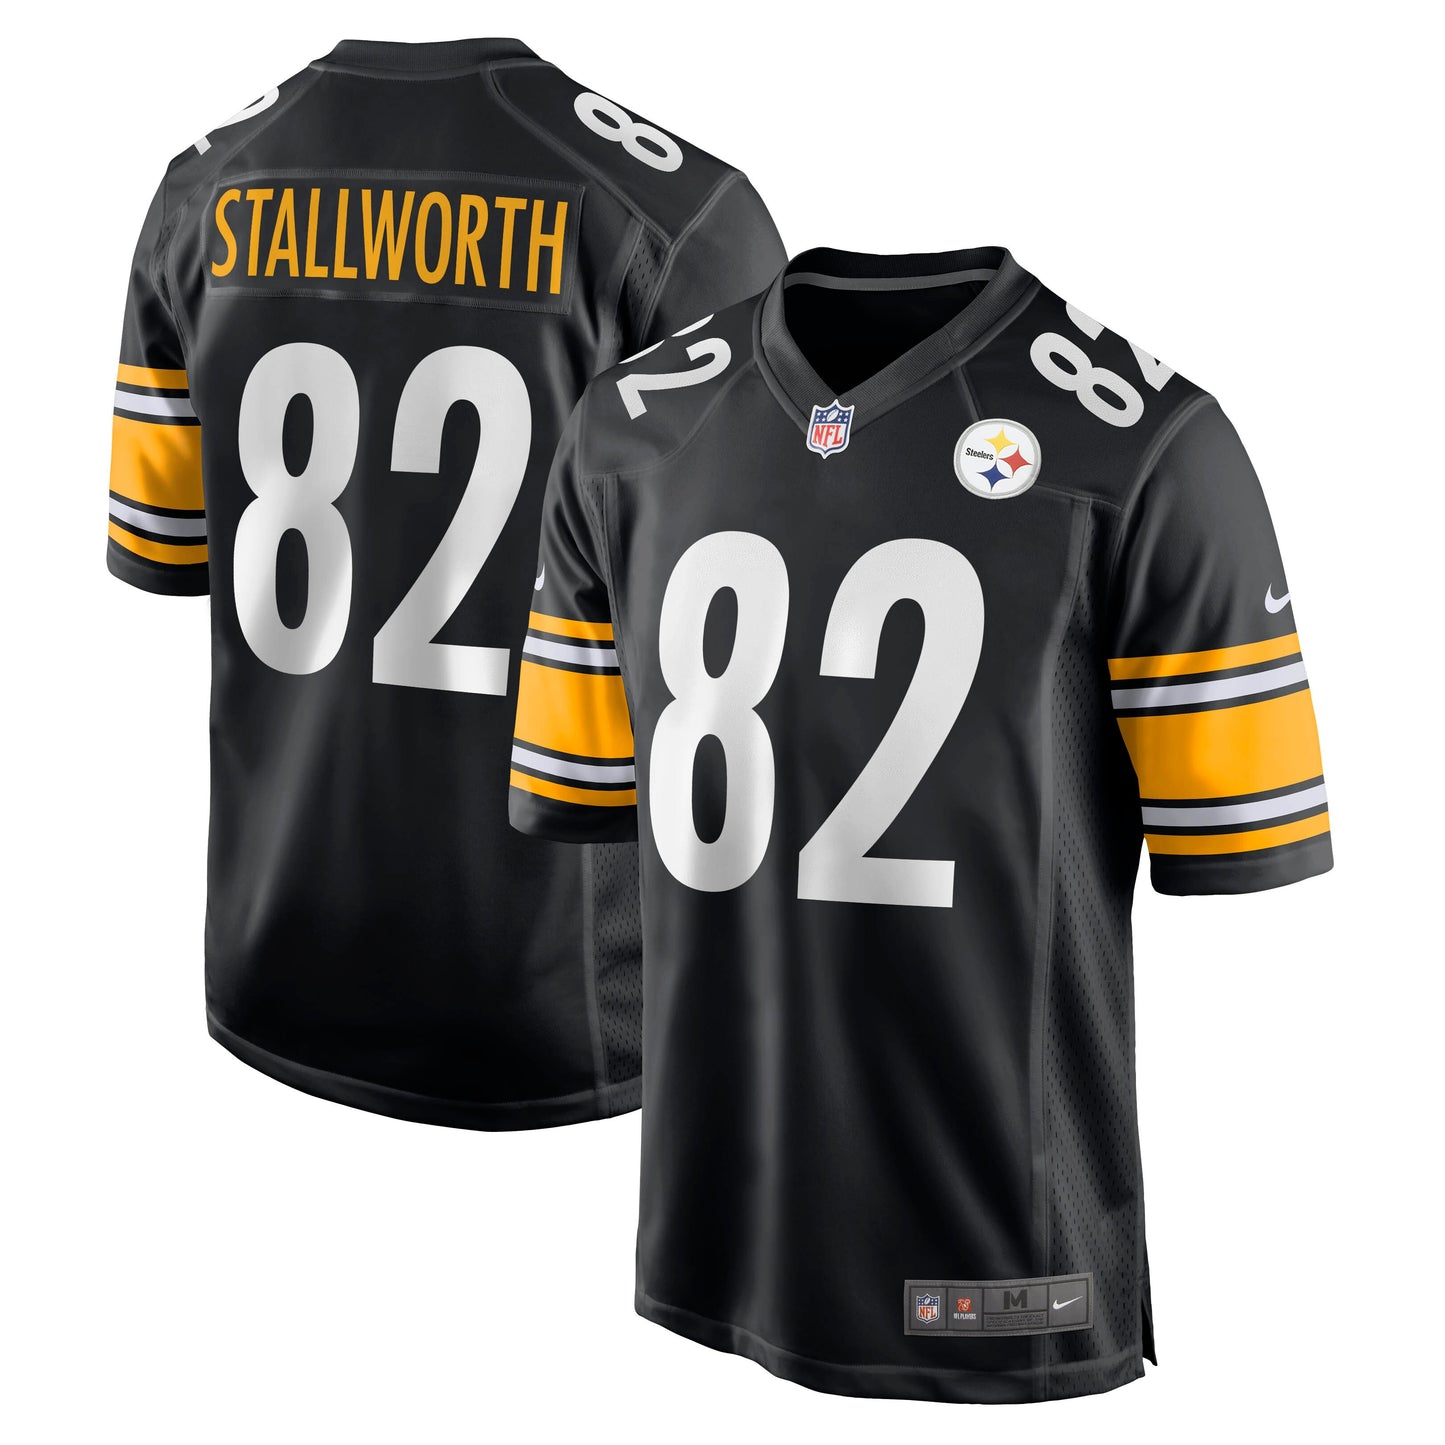 John Stallworth Pittsburgh Steelers Nike Retired Player Jersey - Black